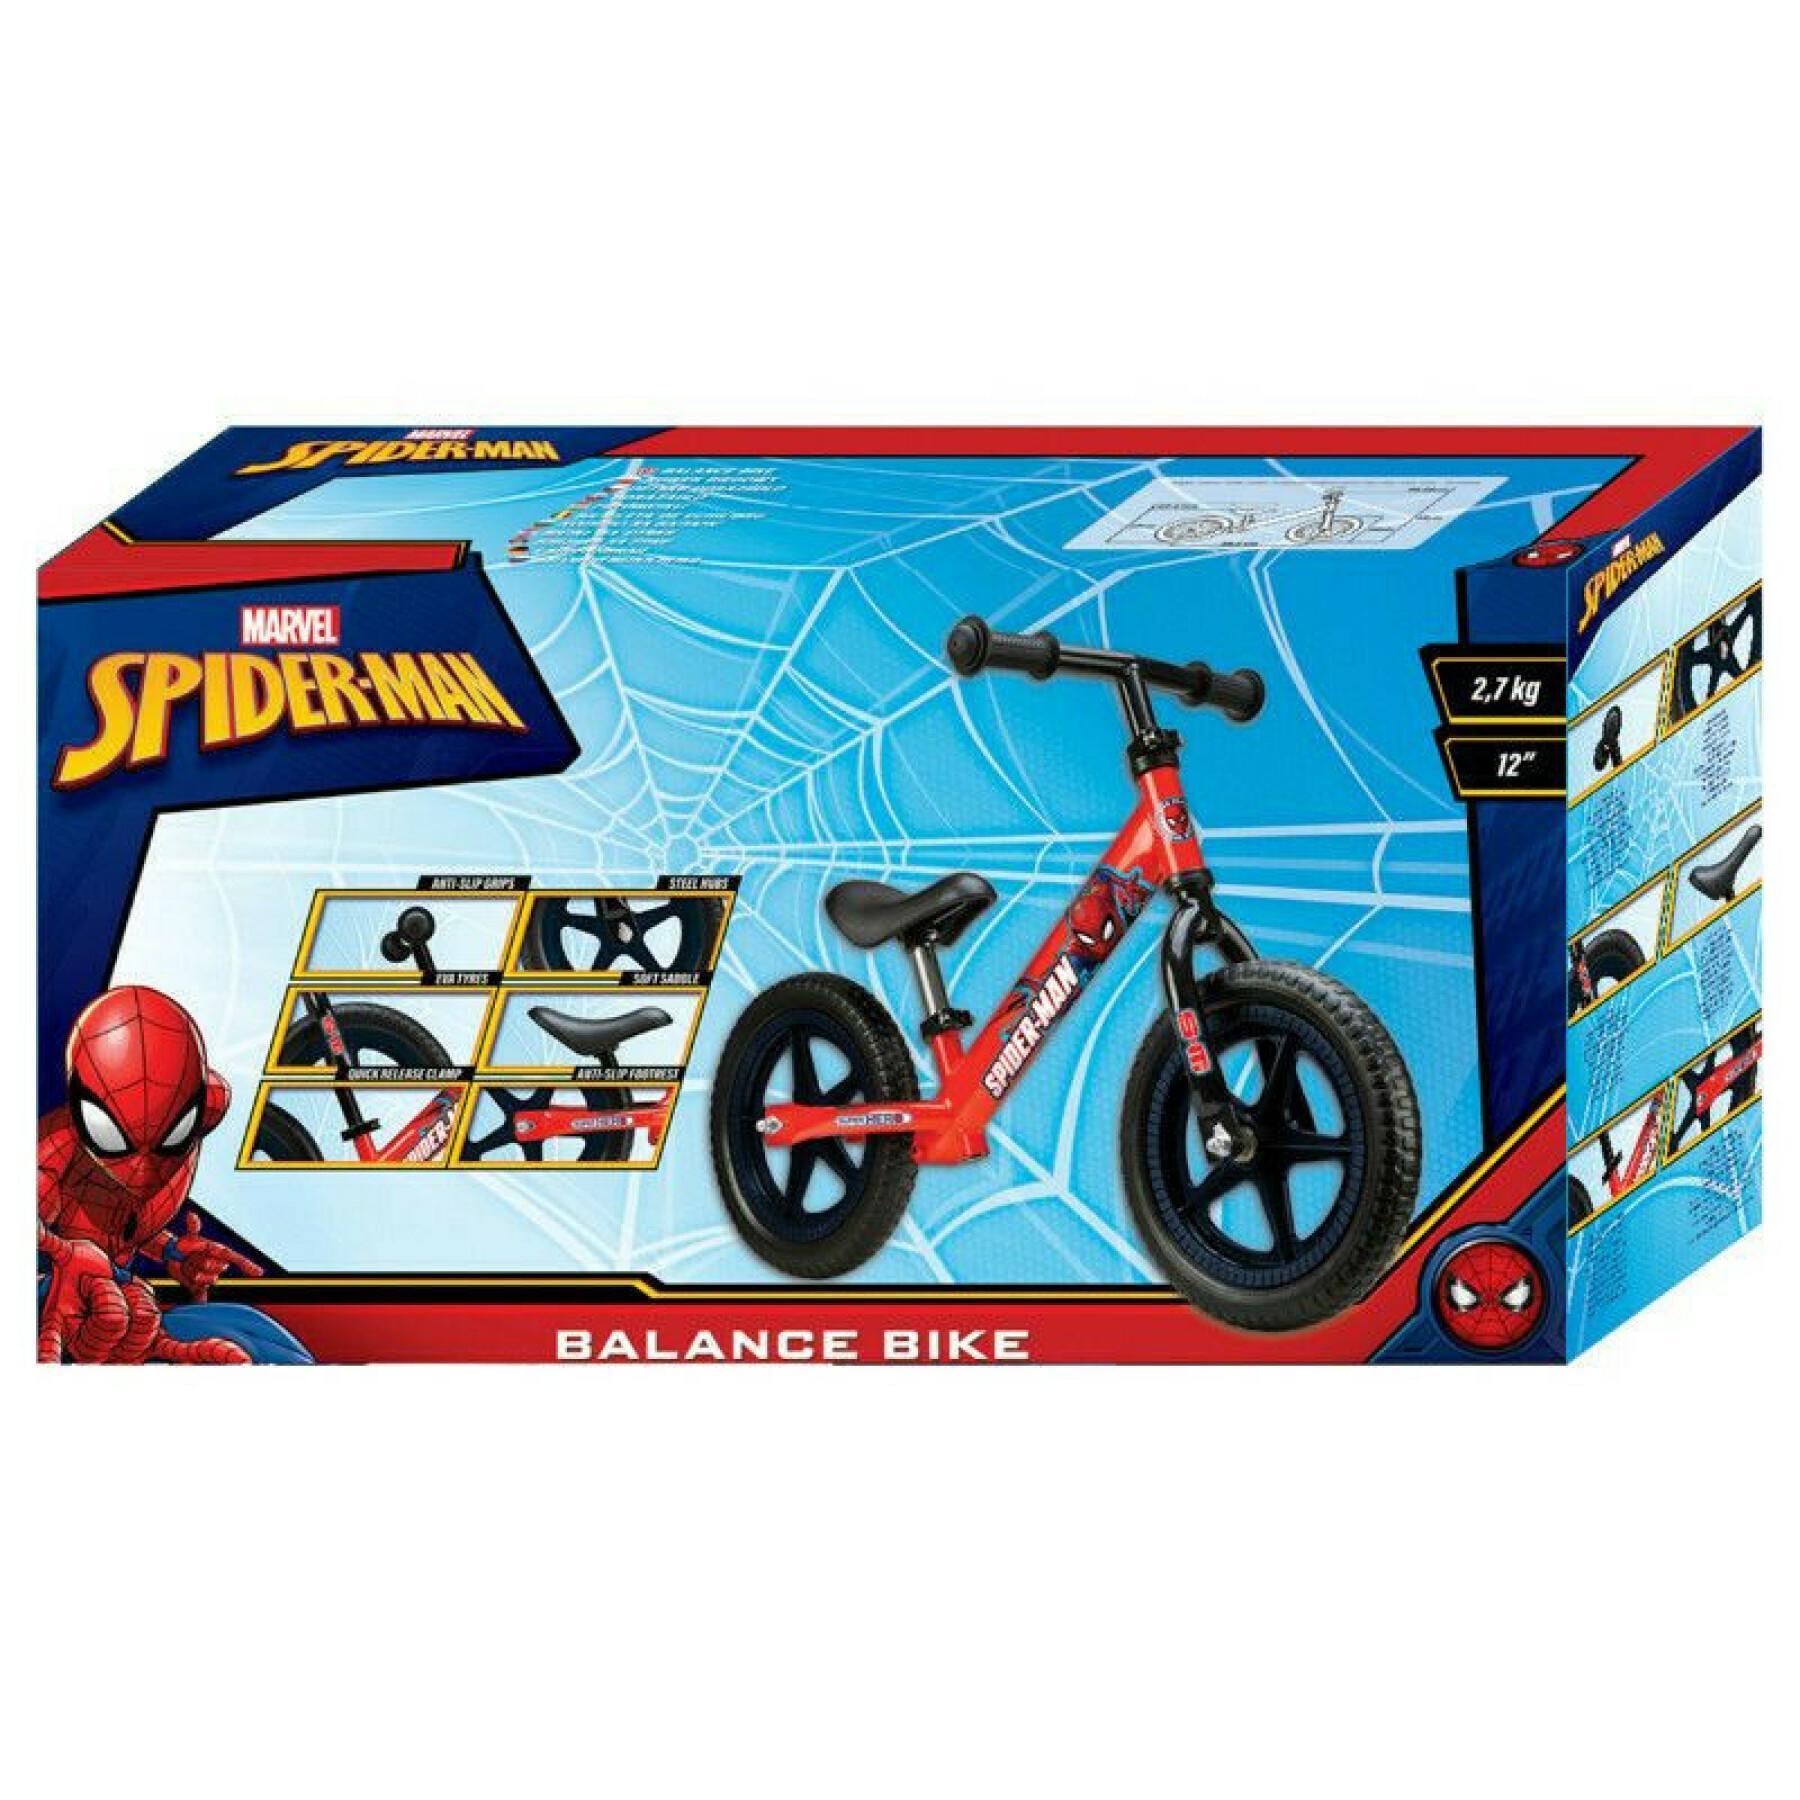 Metal scooter for children Disney spiderman